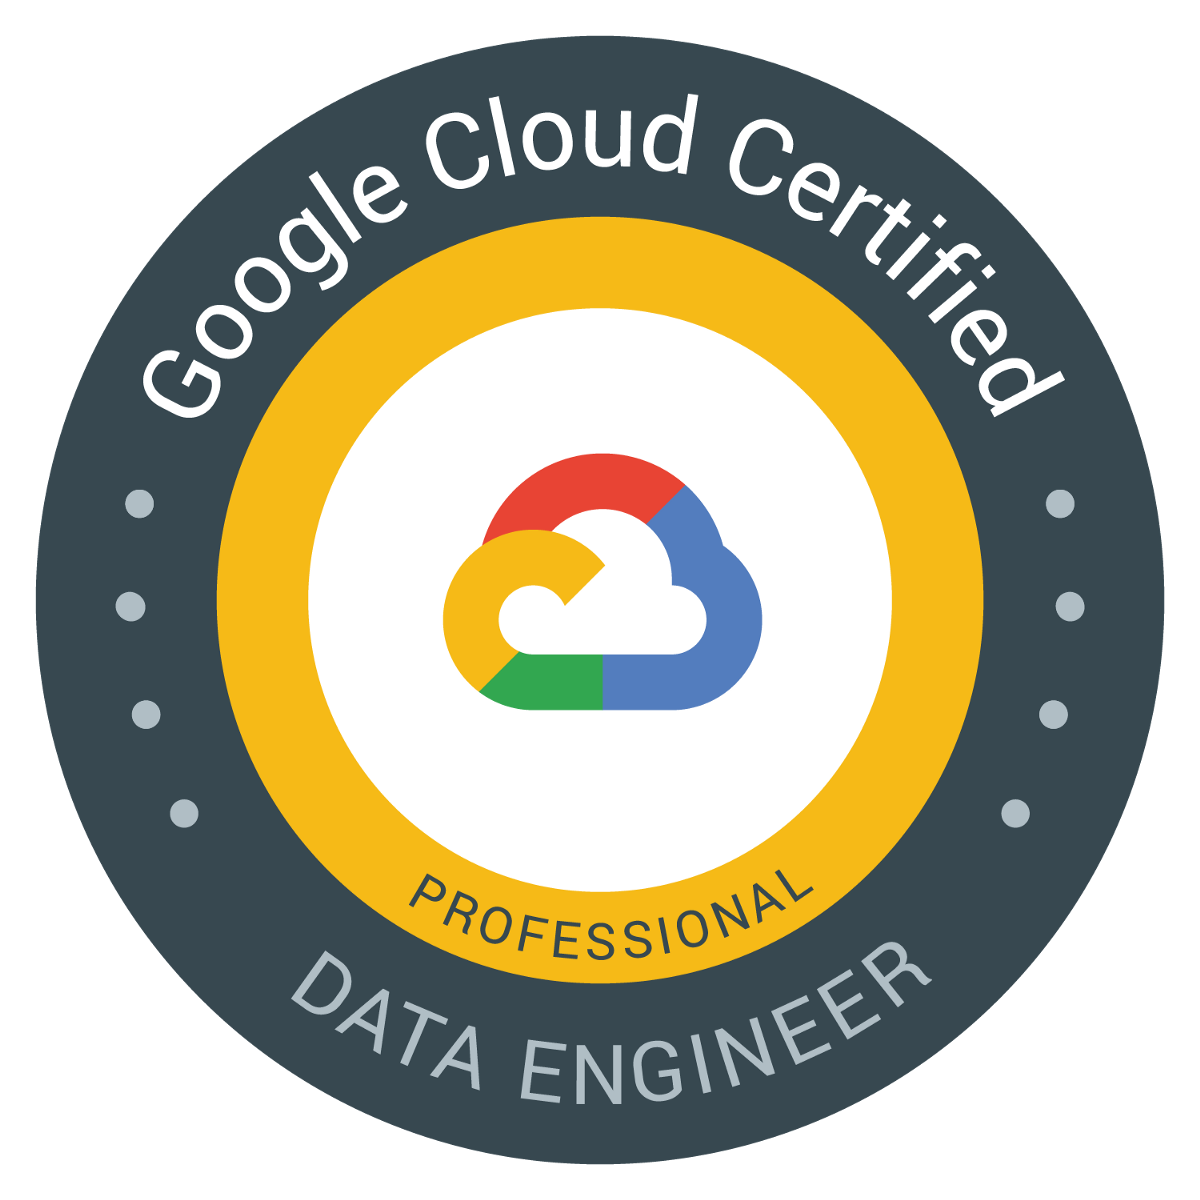 Professional Data Engineer certification